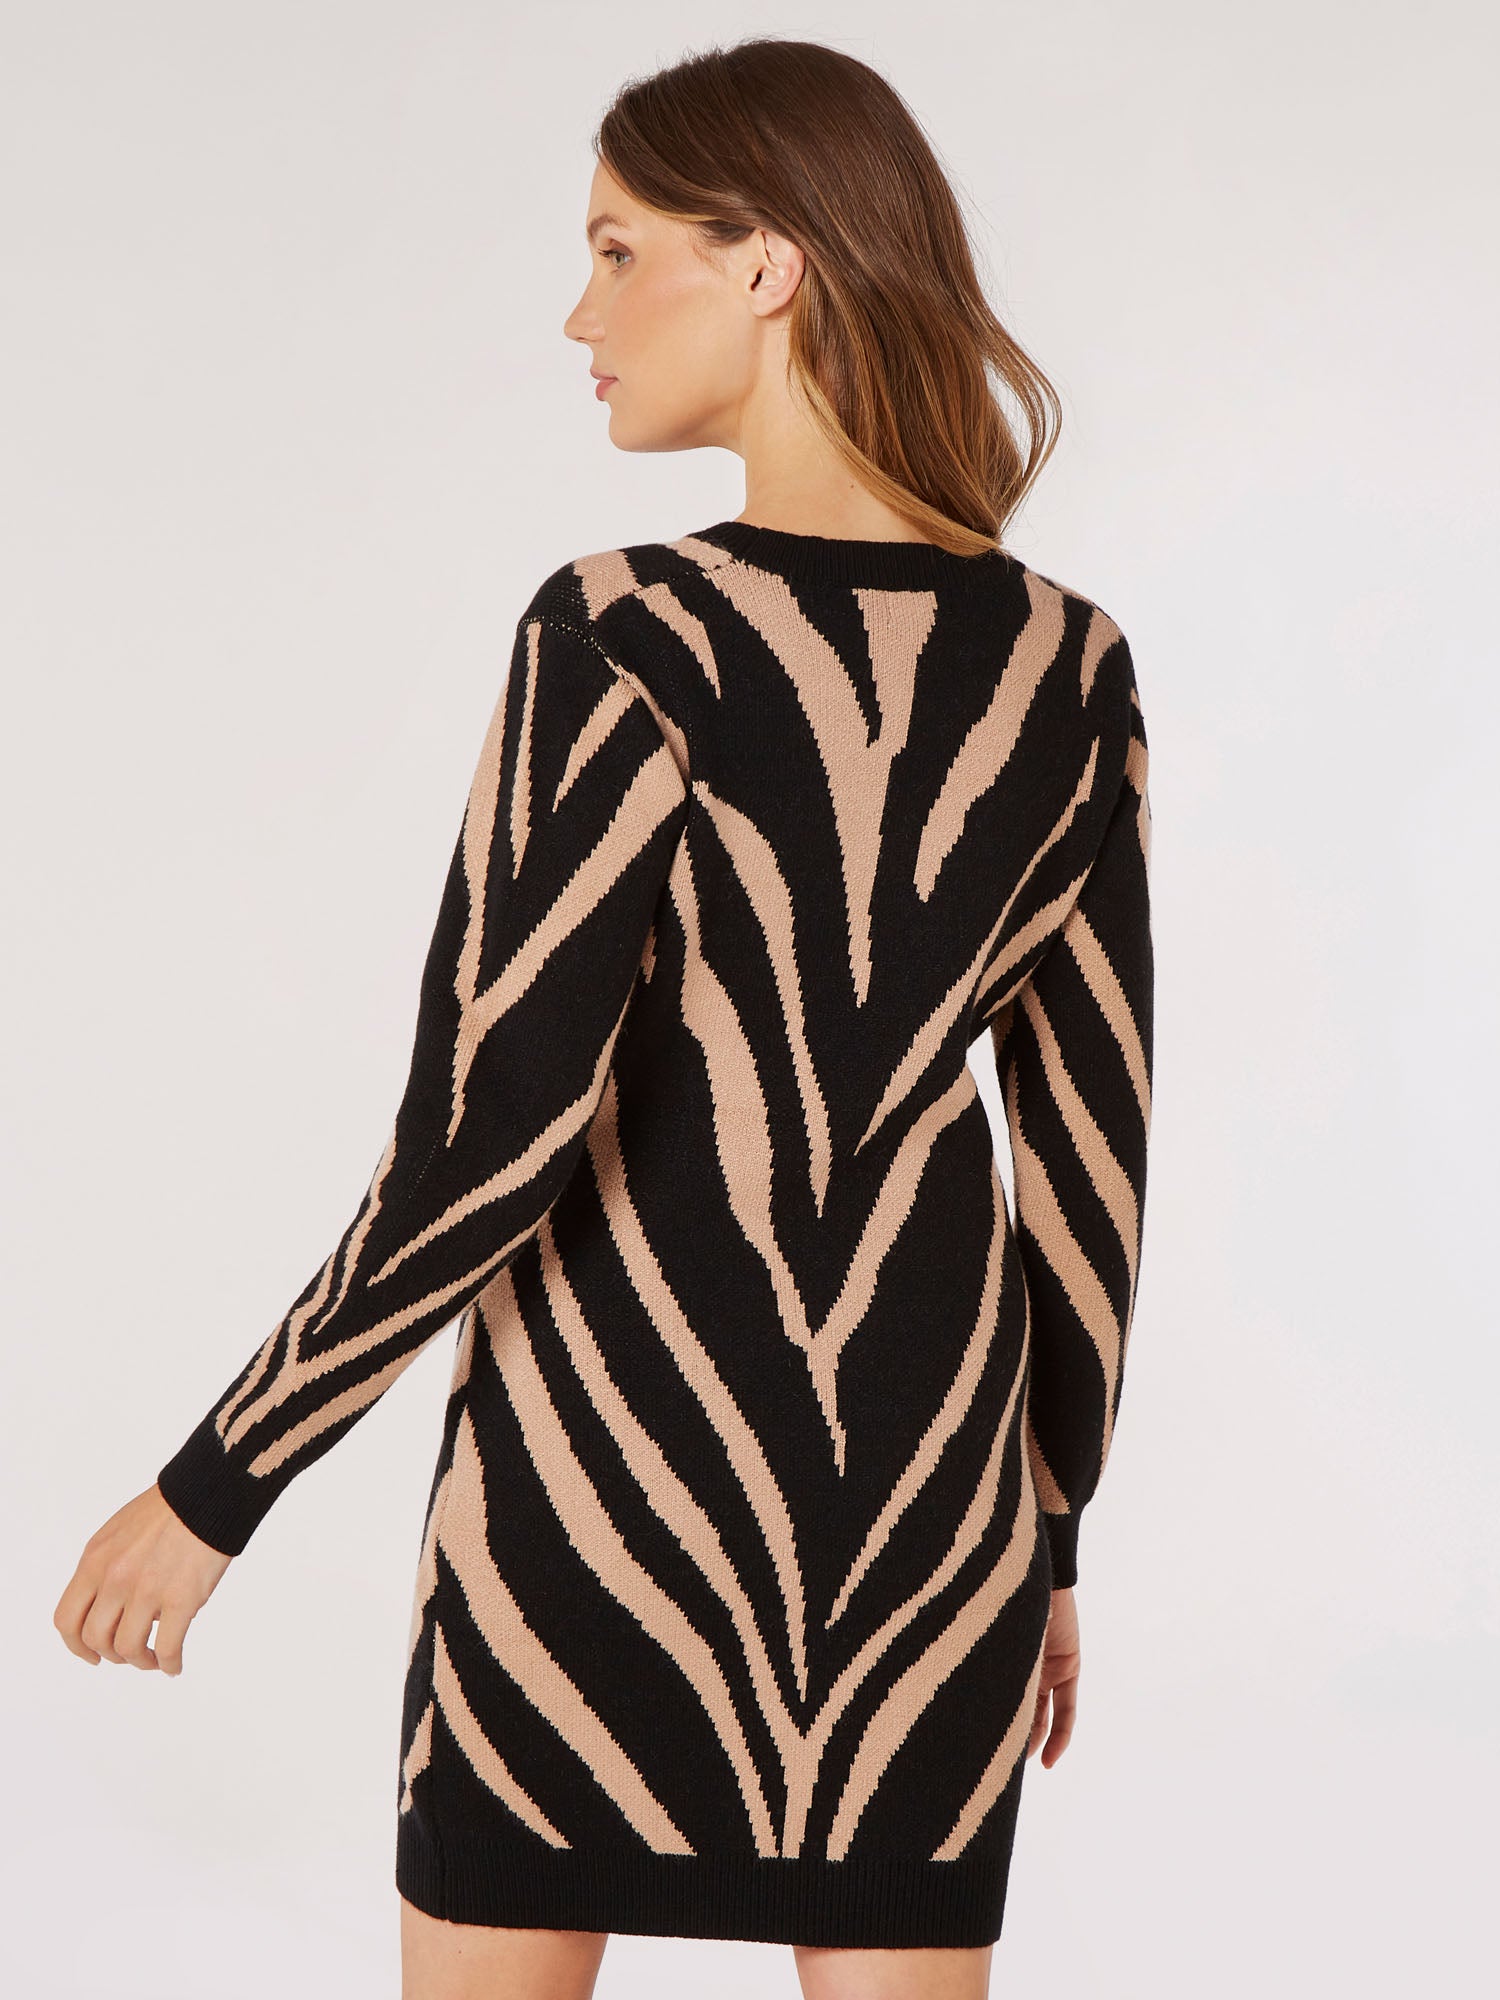 Cora Zebra Print Sweater Dress